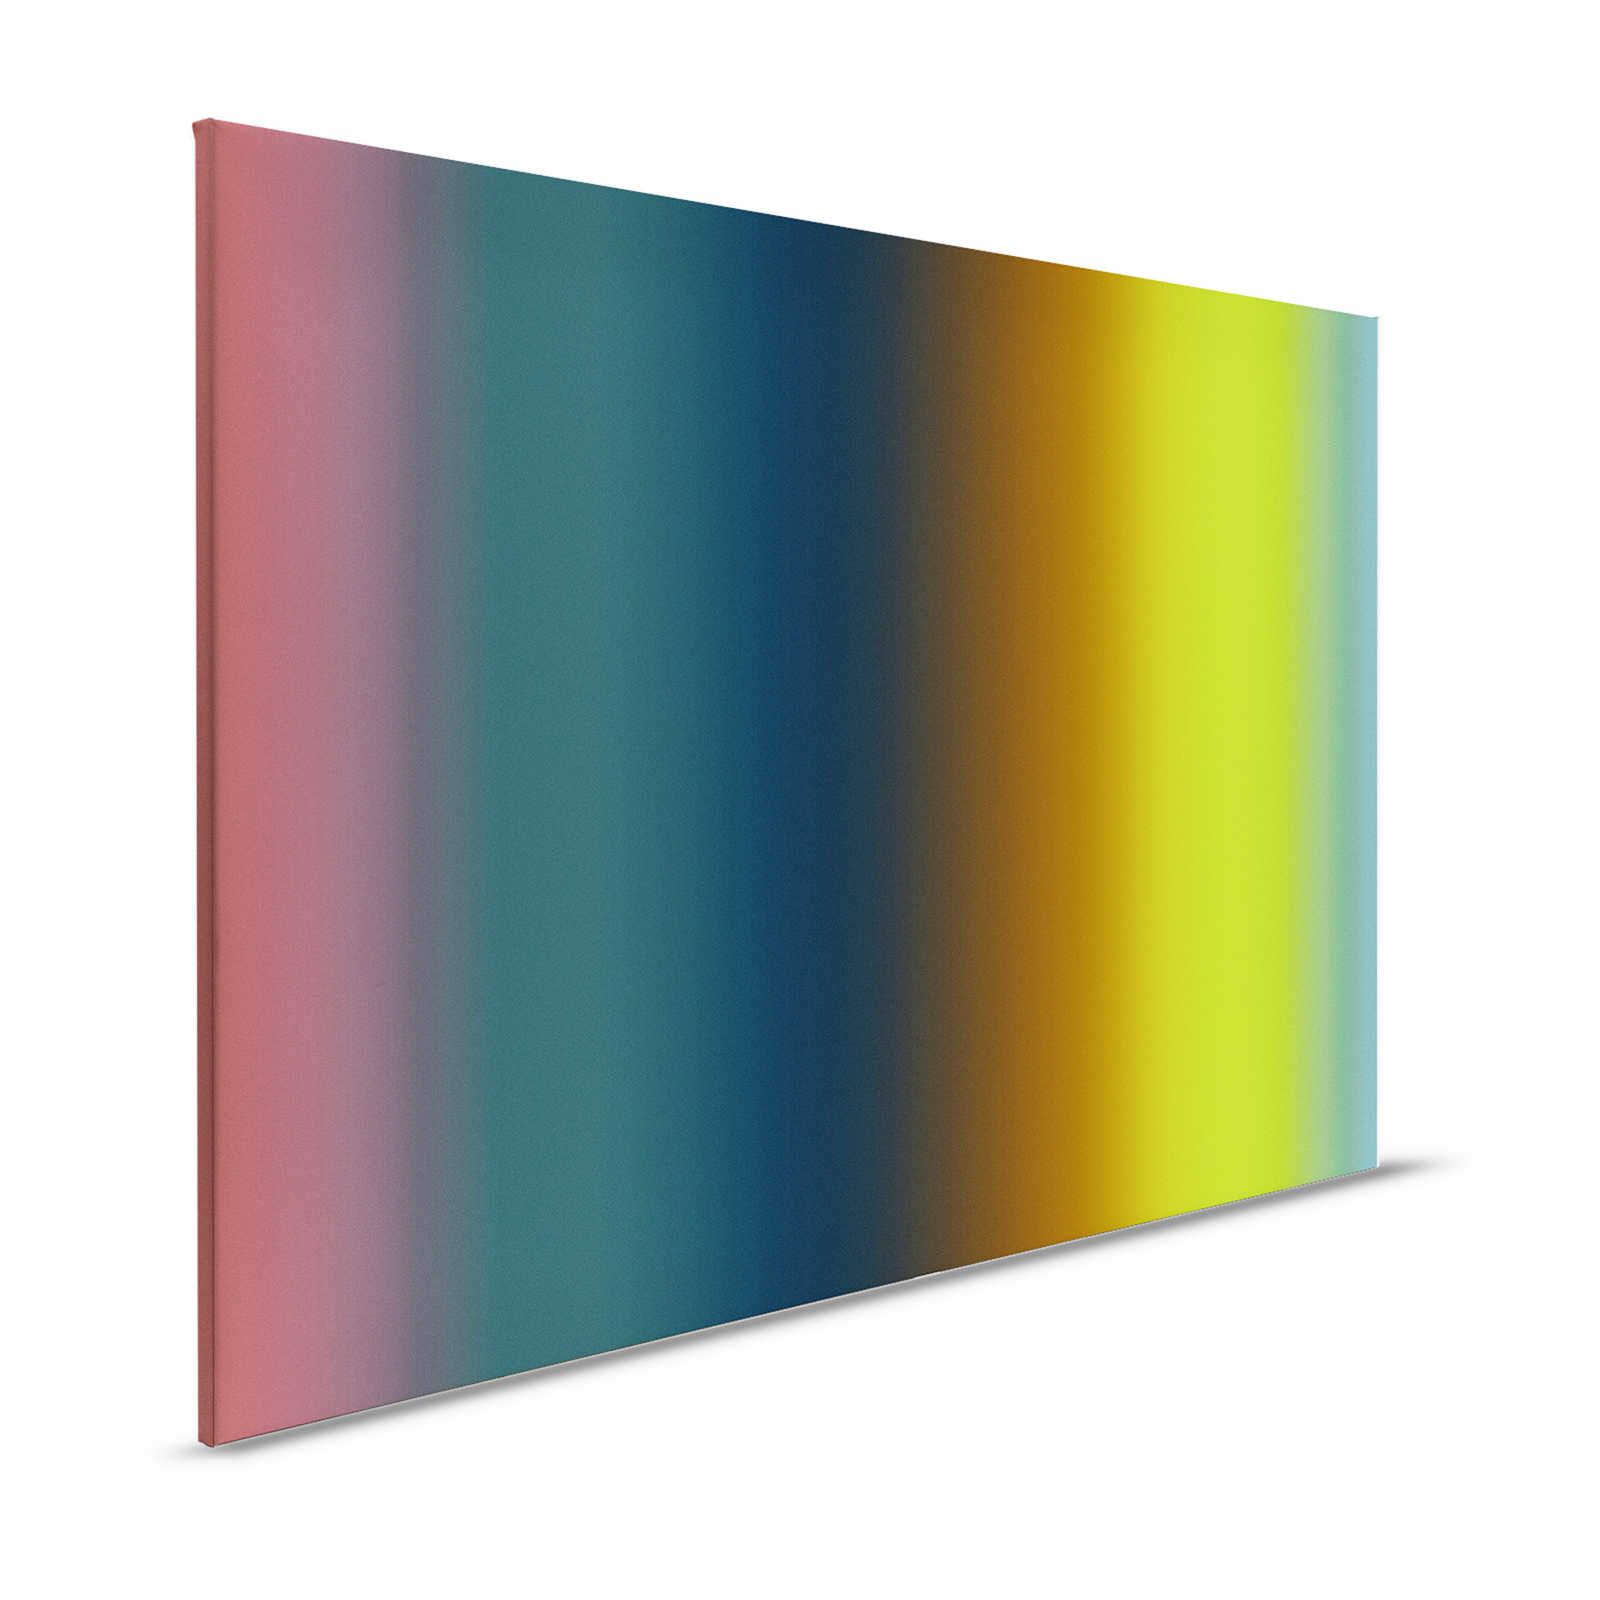 Over the Rainbow 1 - Lienzo espectro de colores arco iris moderno - 1,20 m x 0,80 m
